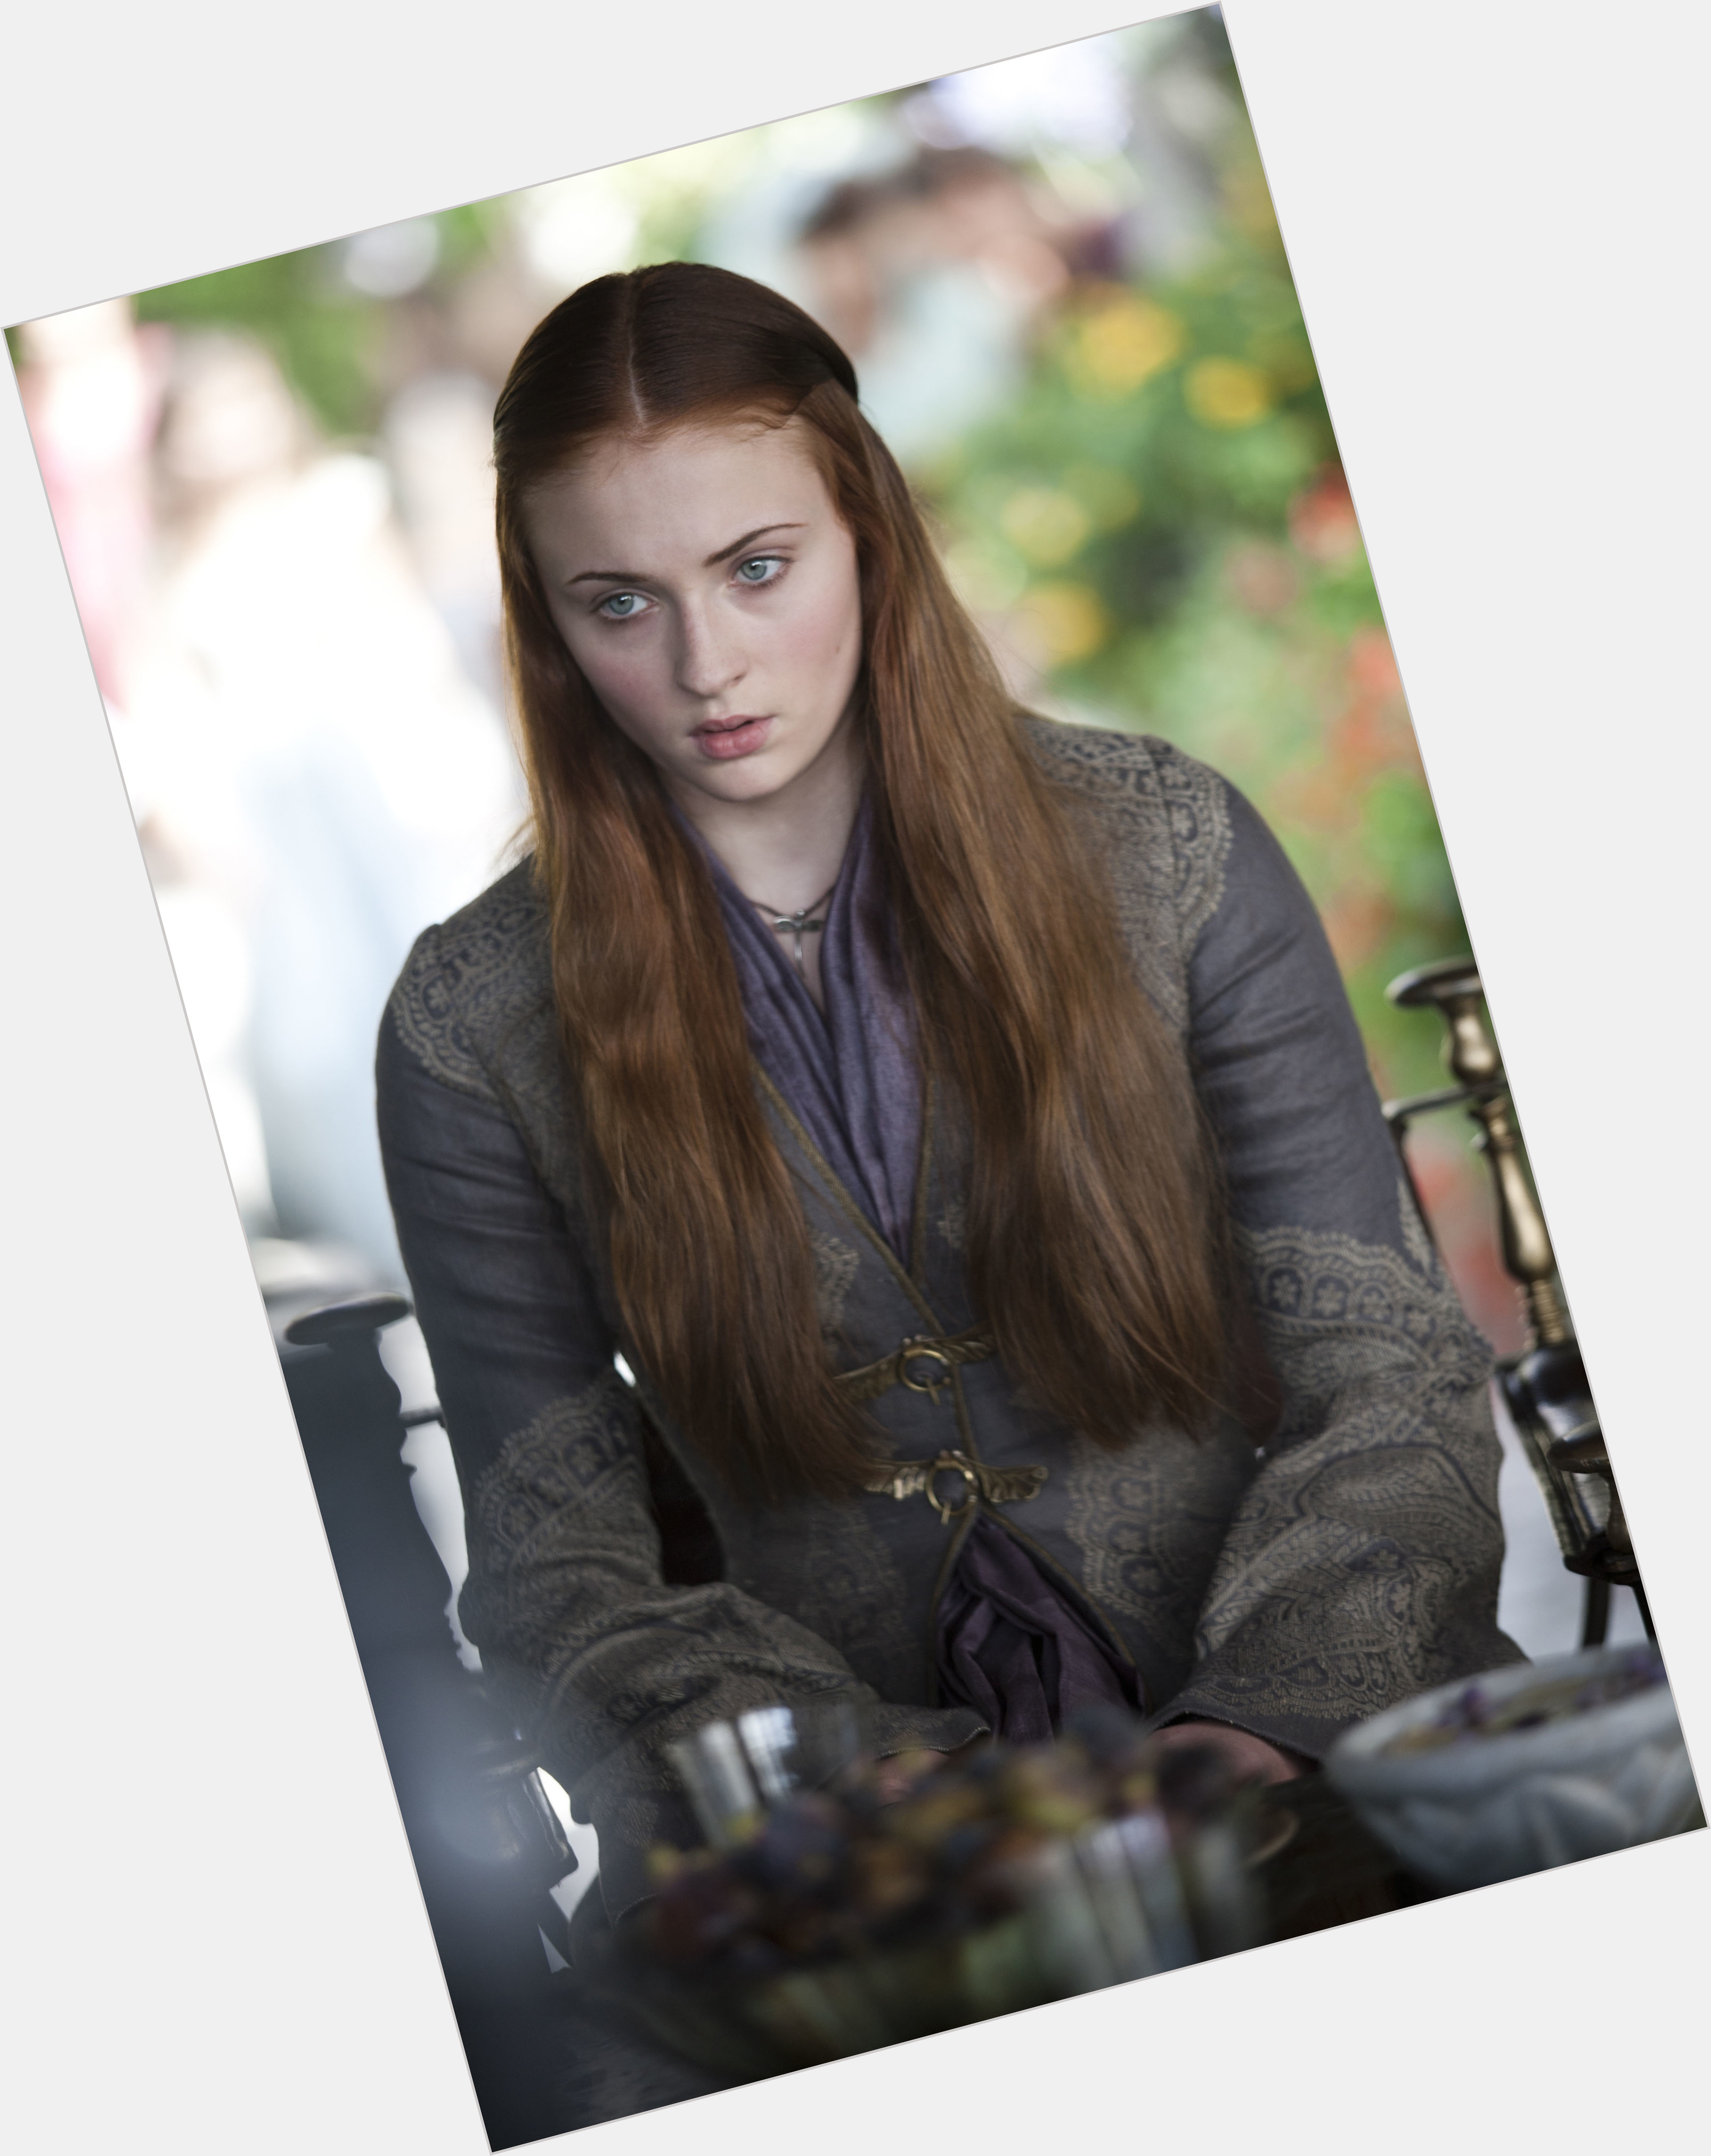 <a href="/hot-women/sansa-stark/is-she-real-redhead-littlefinger39s-daughter-evil-bad">Sansa Stark</a> Slim body,  red hair & hairstyles